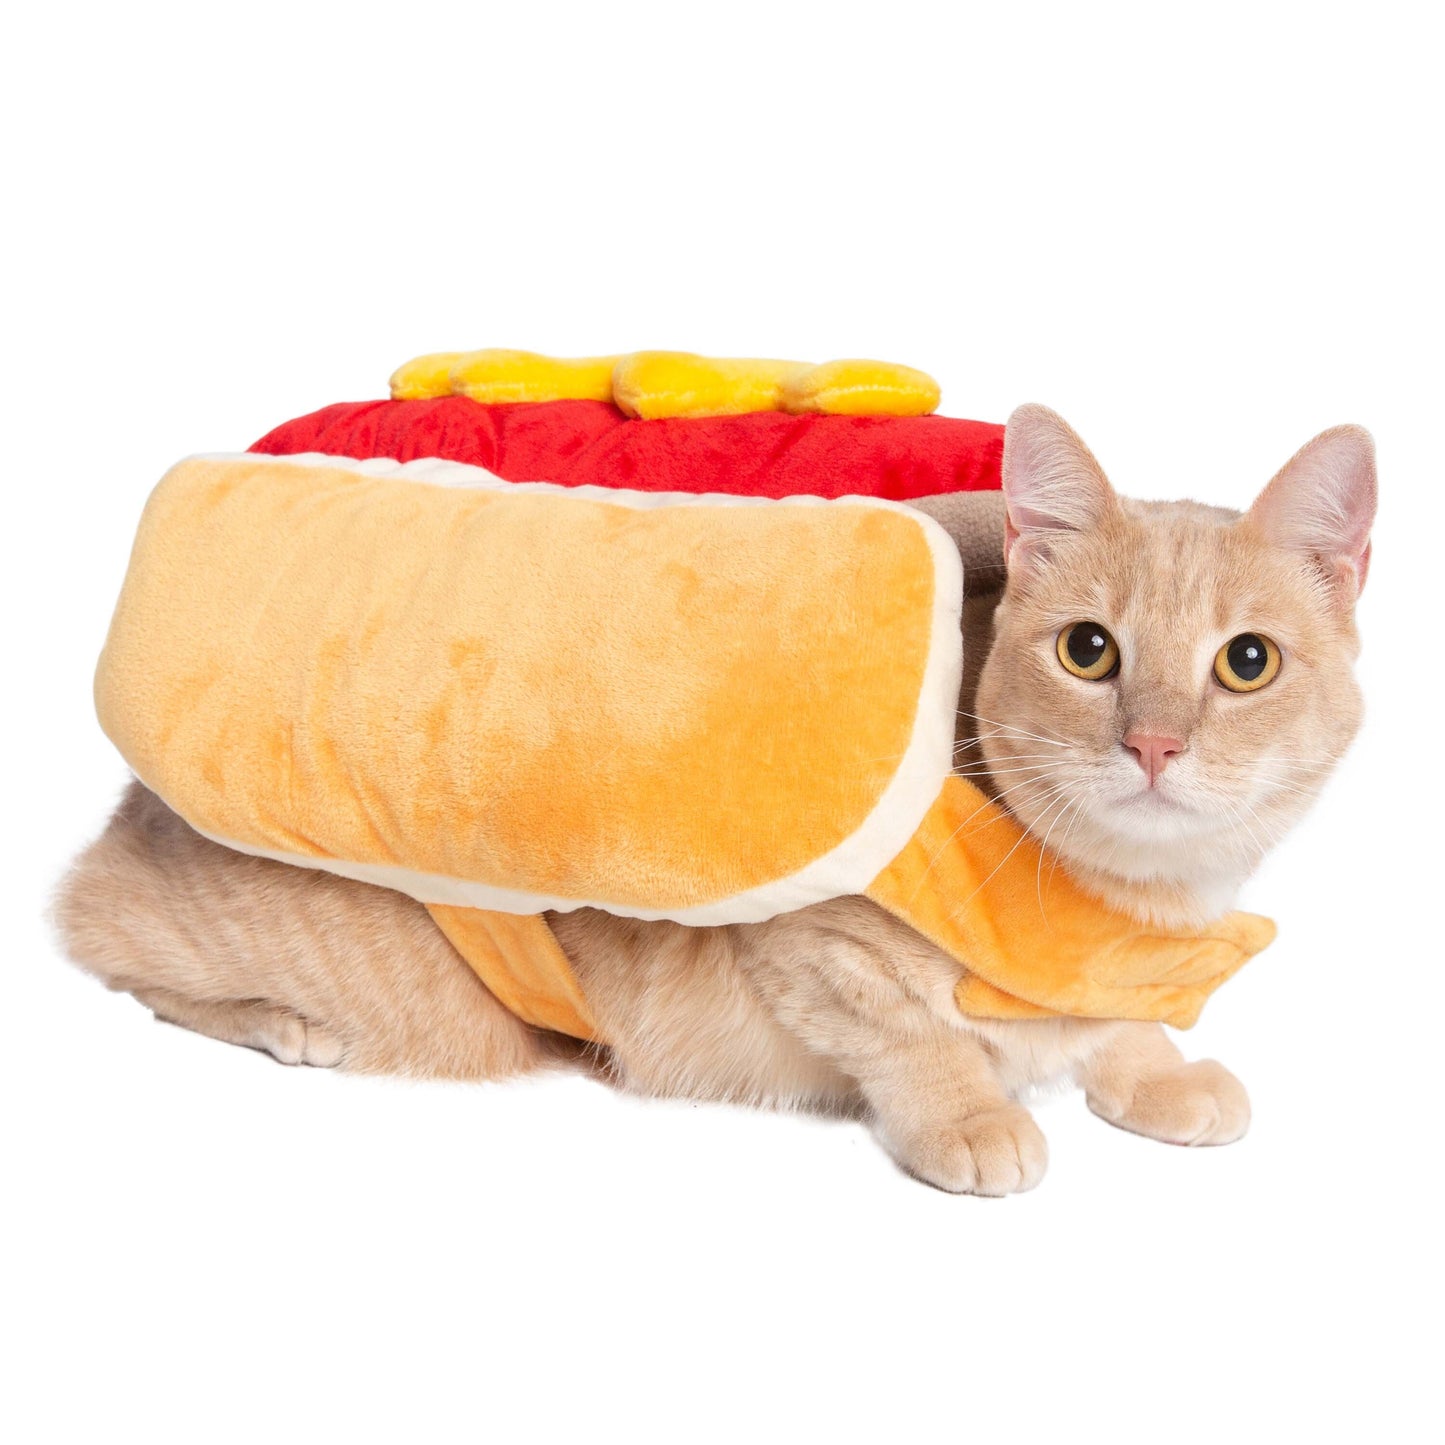 Pet Kreme Hot Dog Costume For Dogs